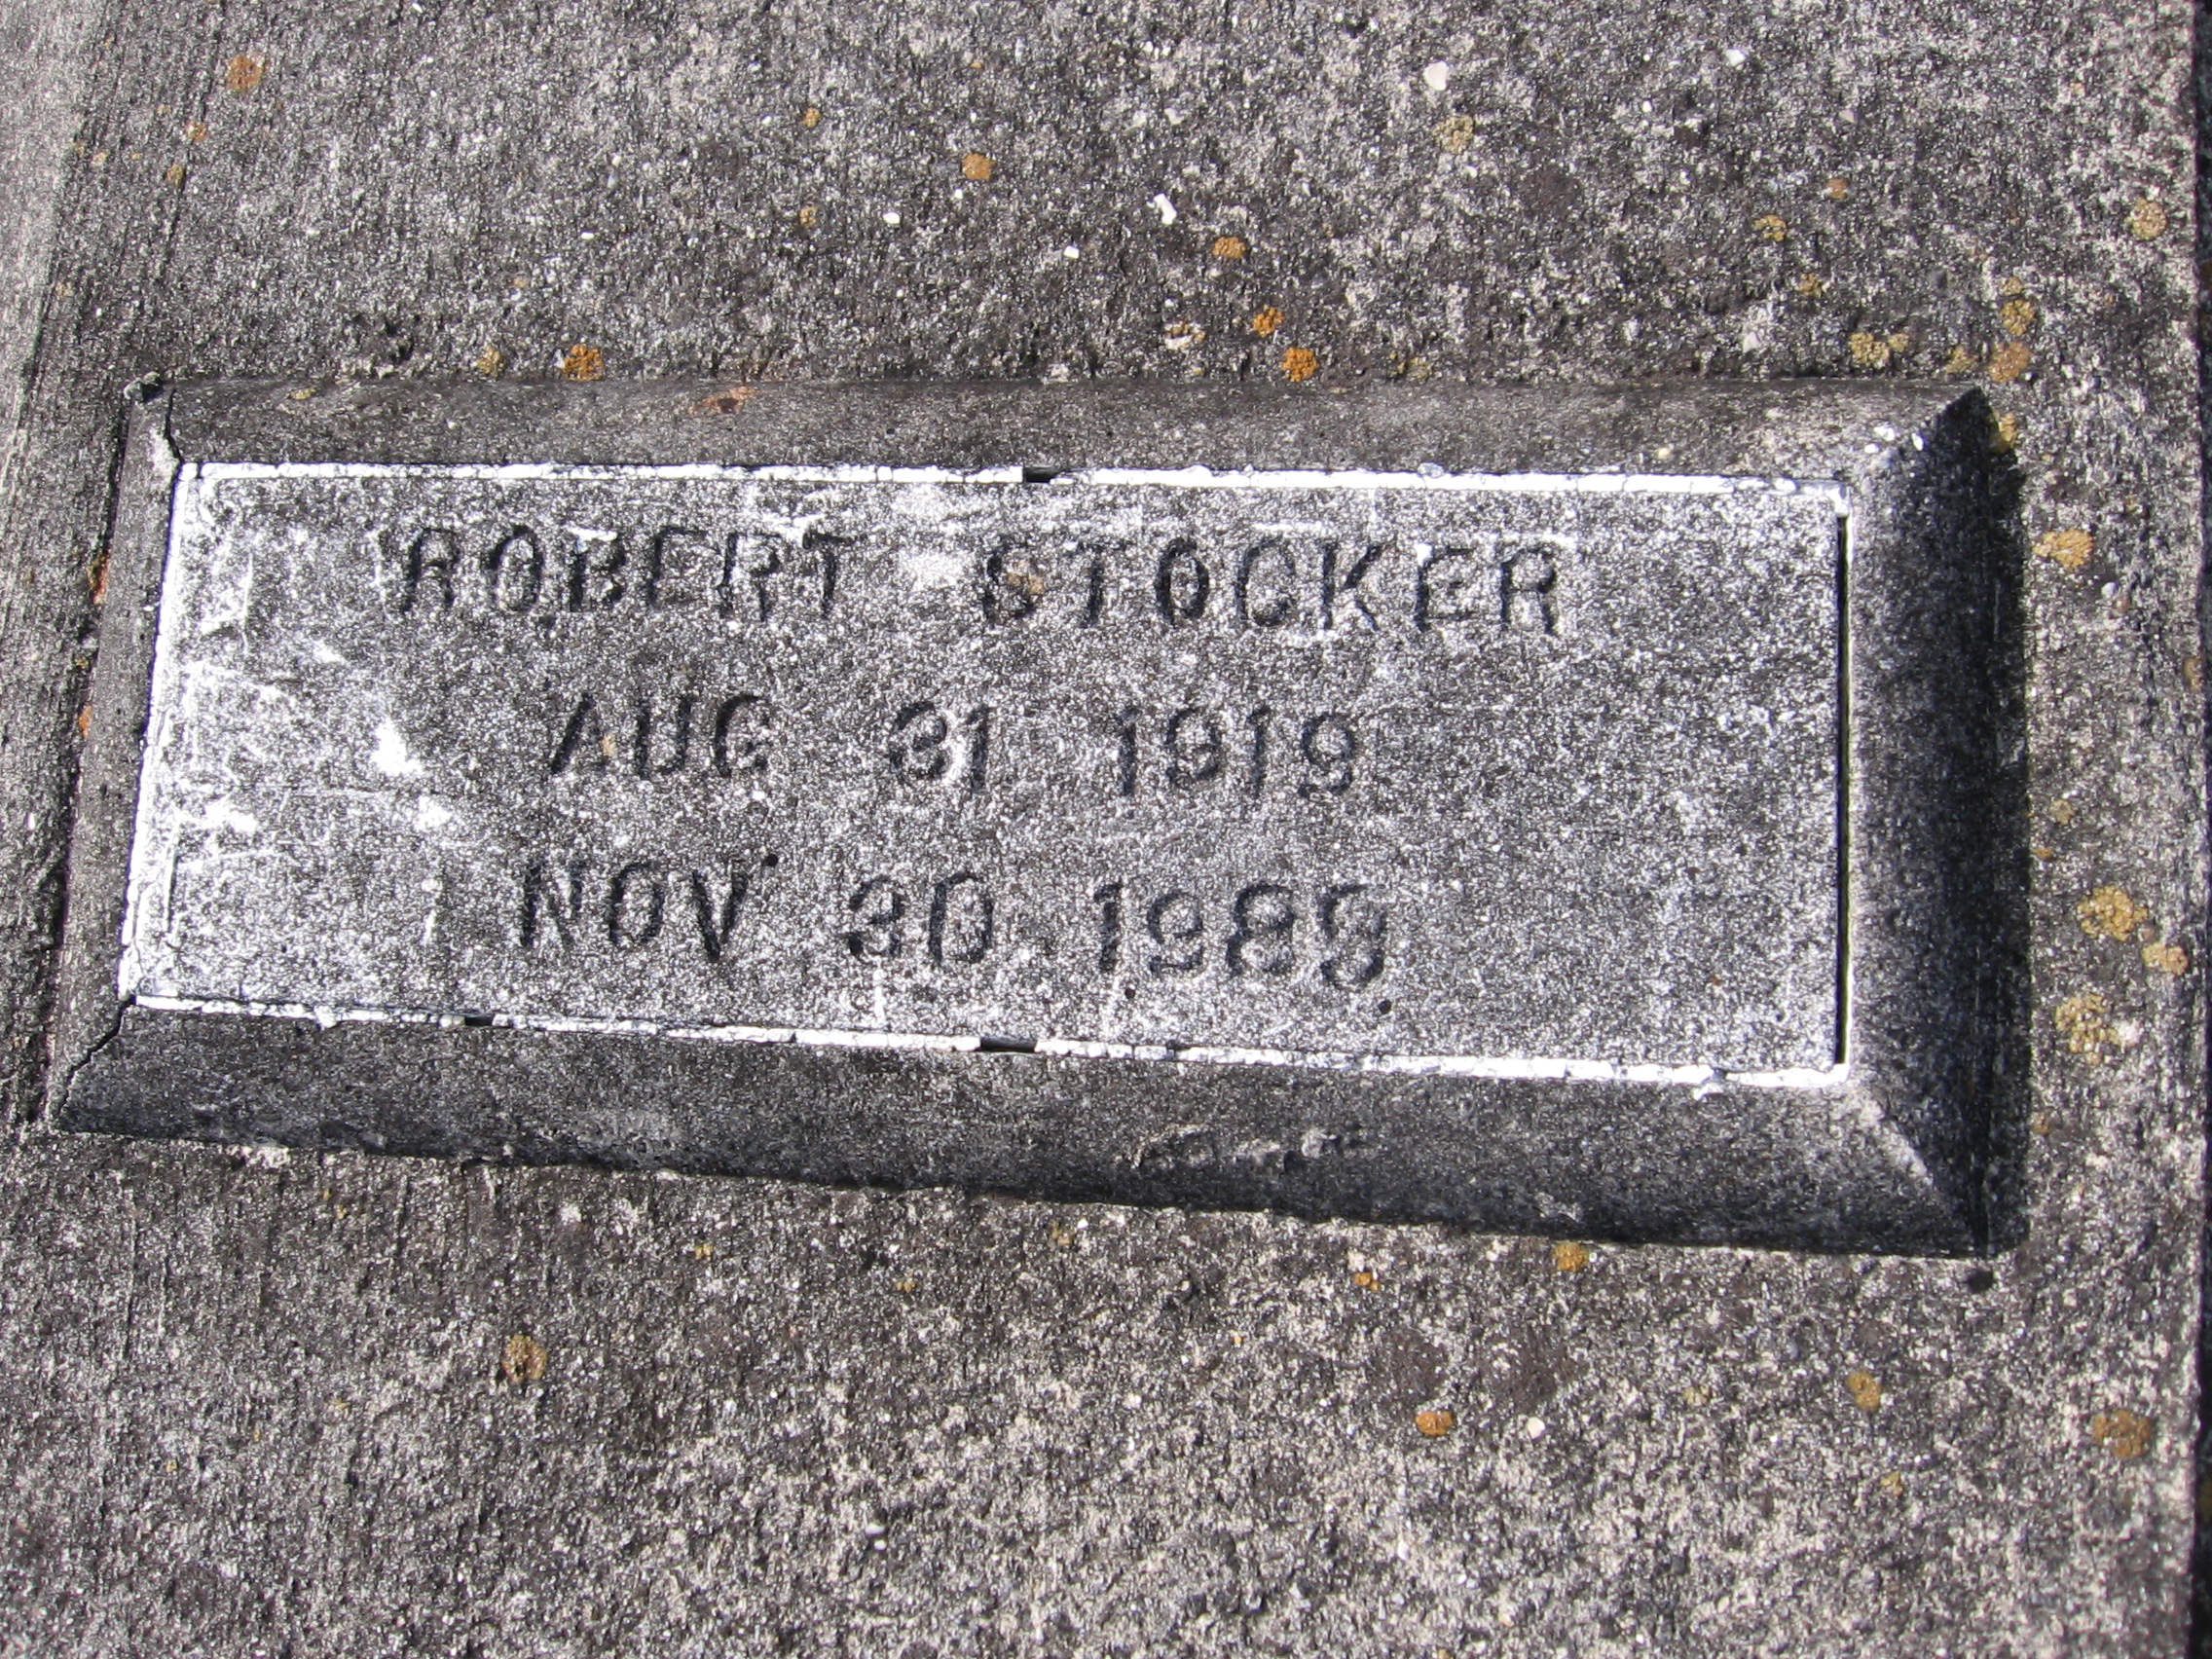 Robert Stocker